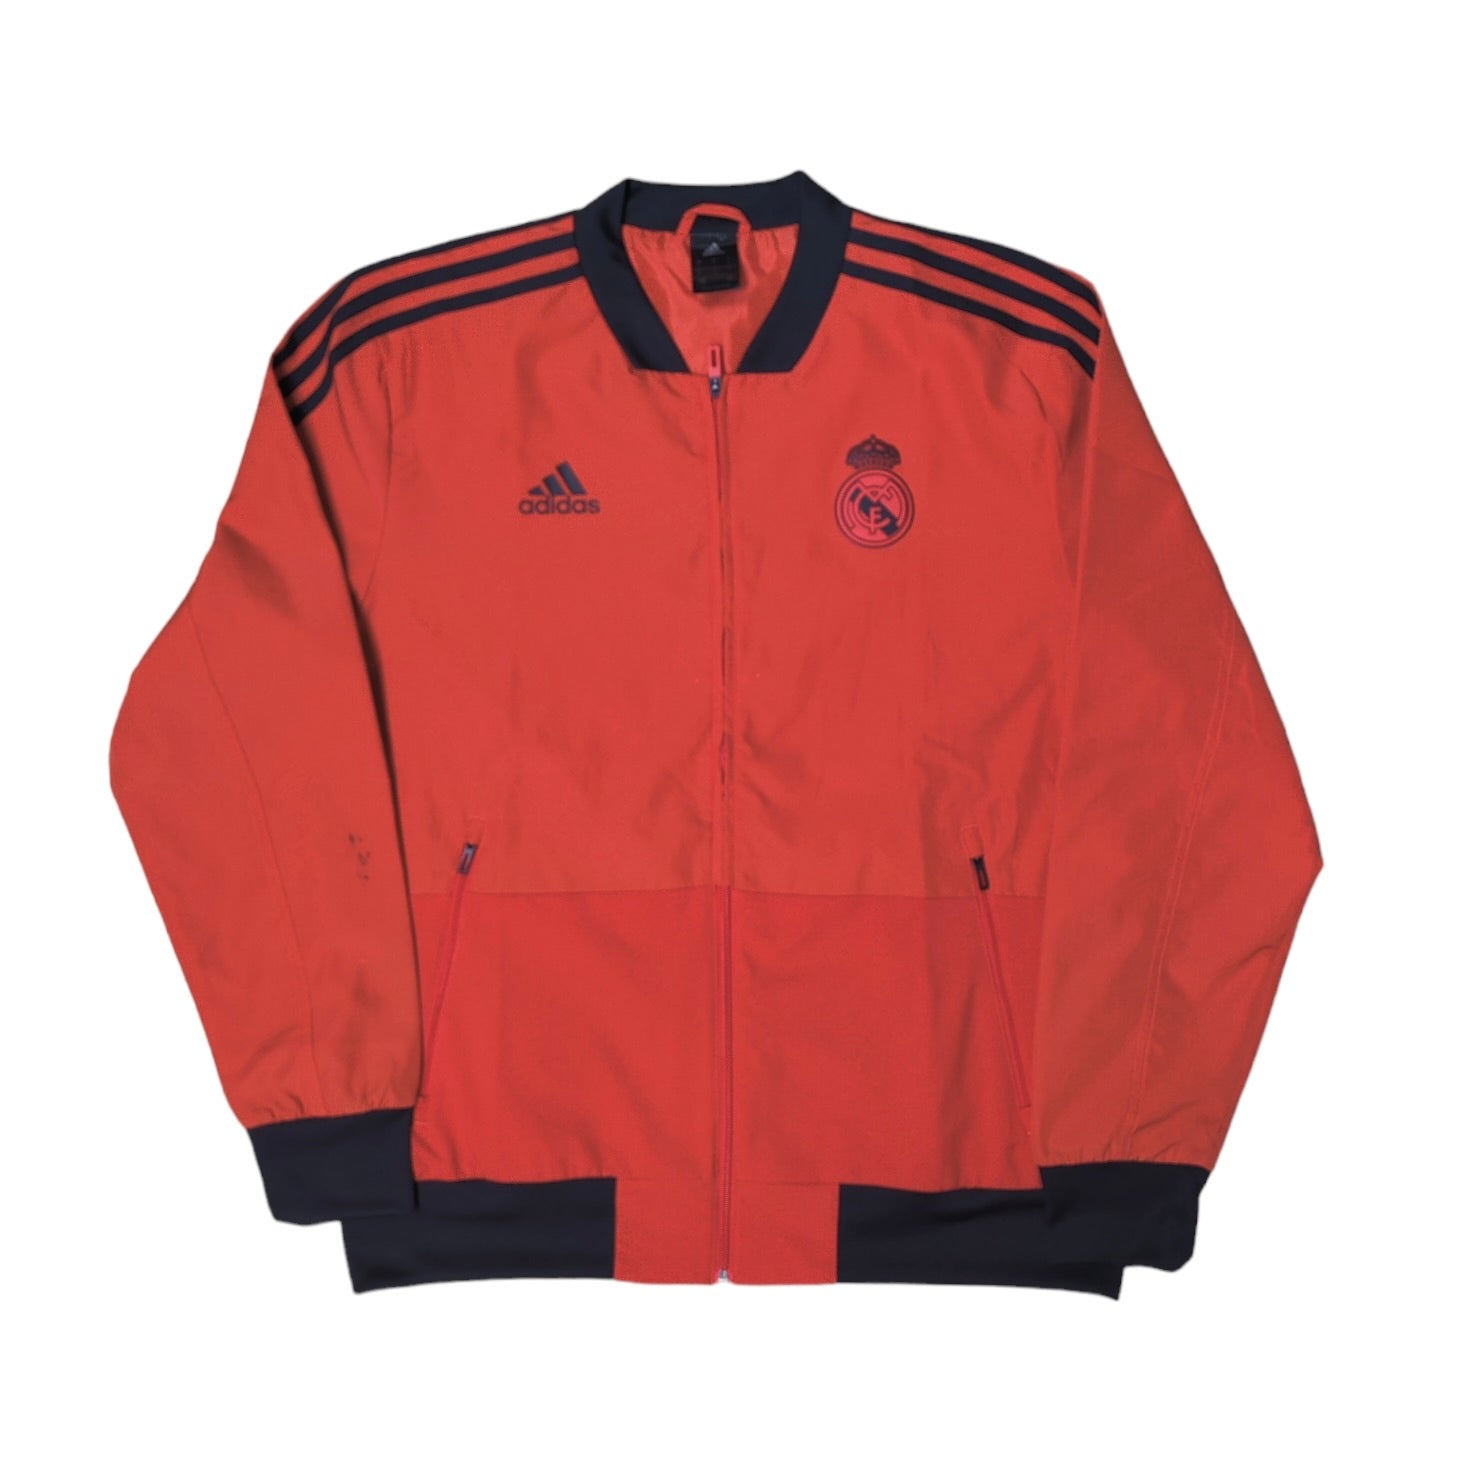 Adidas Real Madrid Presentation UCL Football Jacket